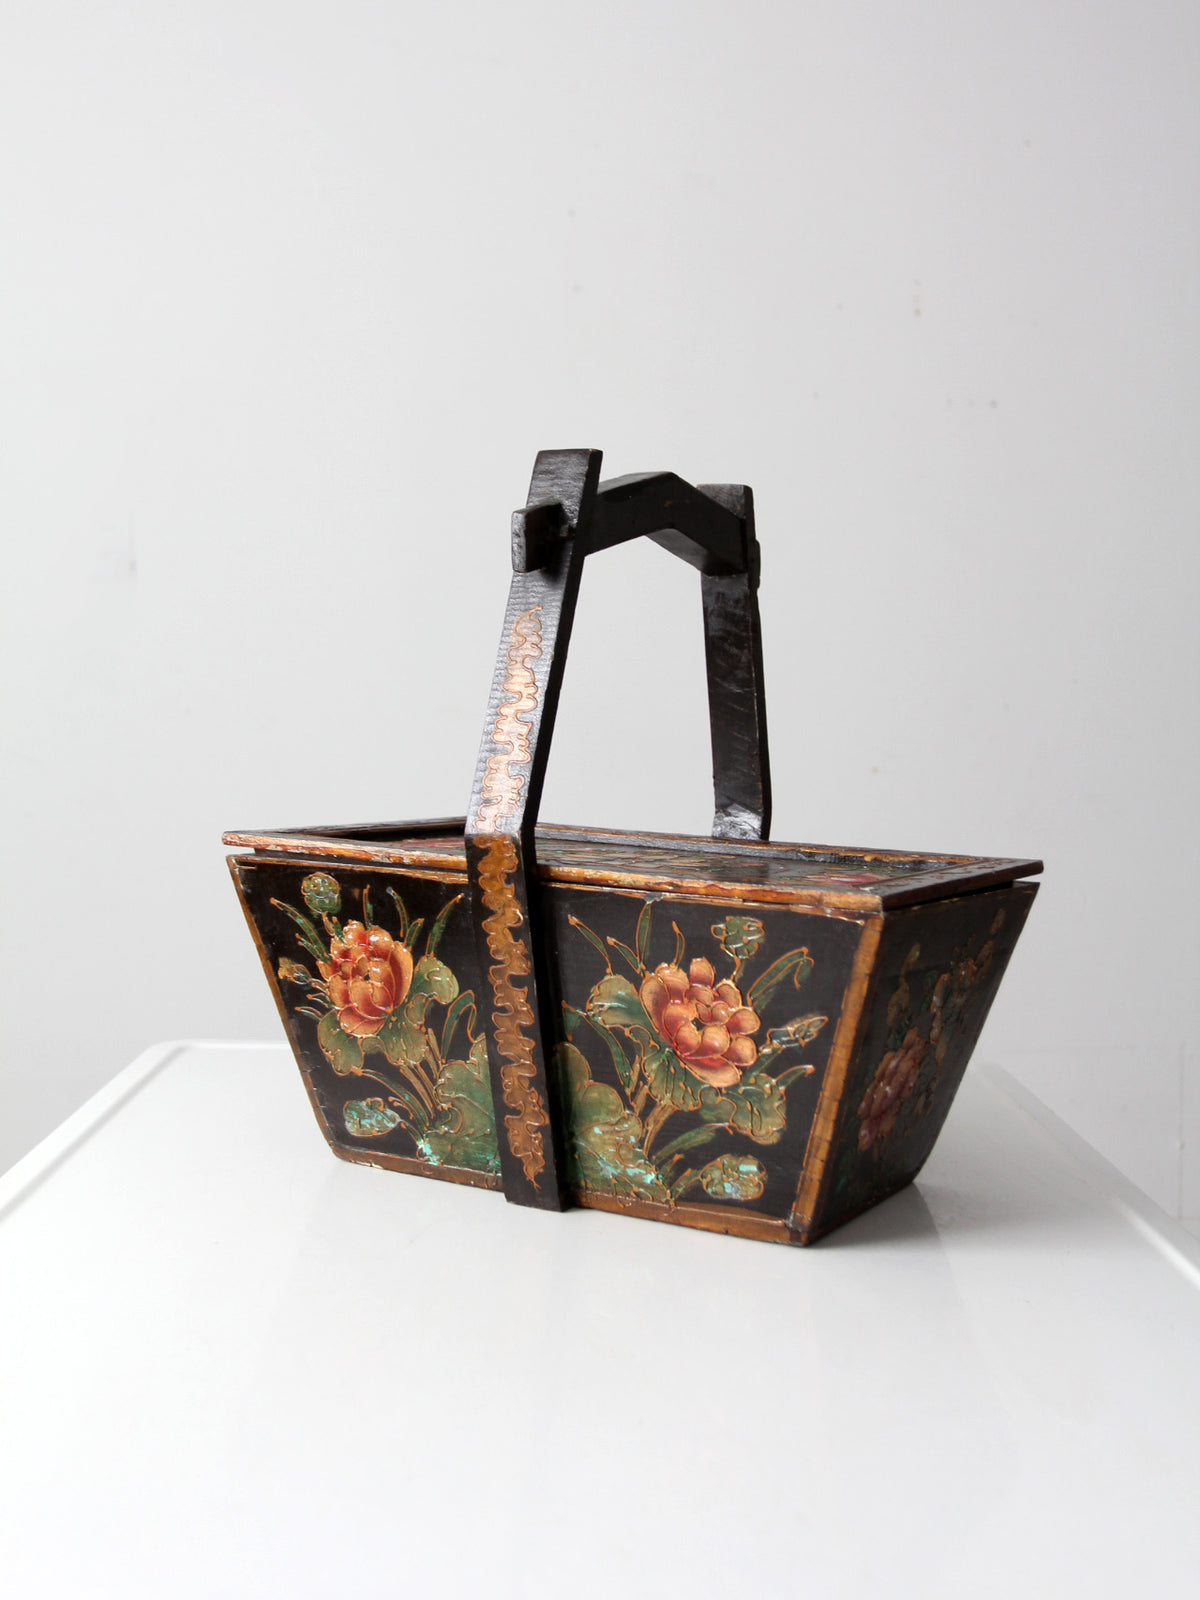 Buy Shoe Shine Box Handmade Rustic Primitive Antique Wooden Online